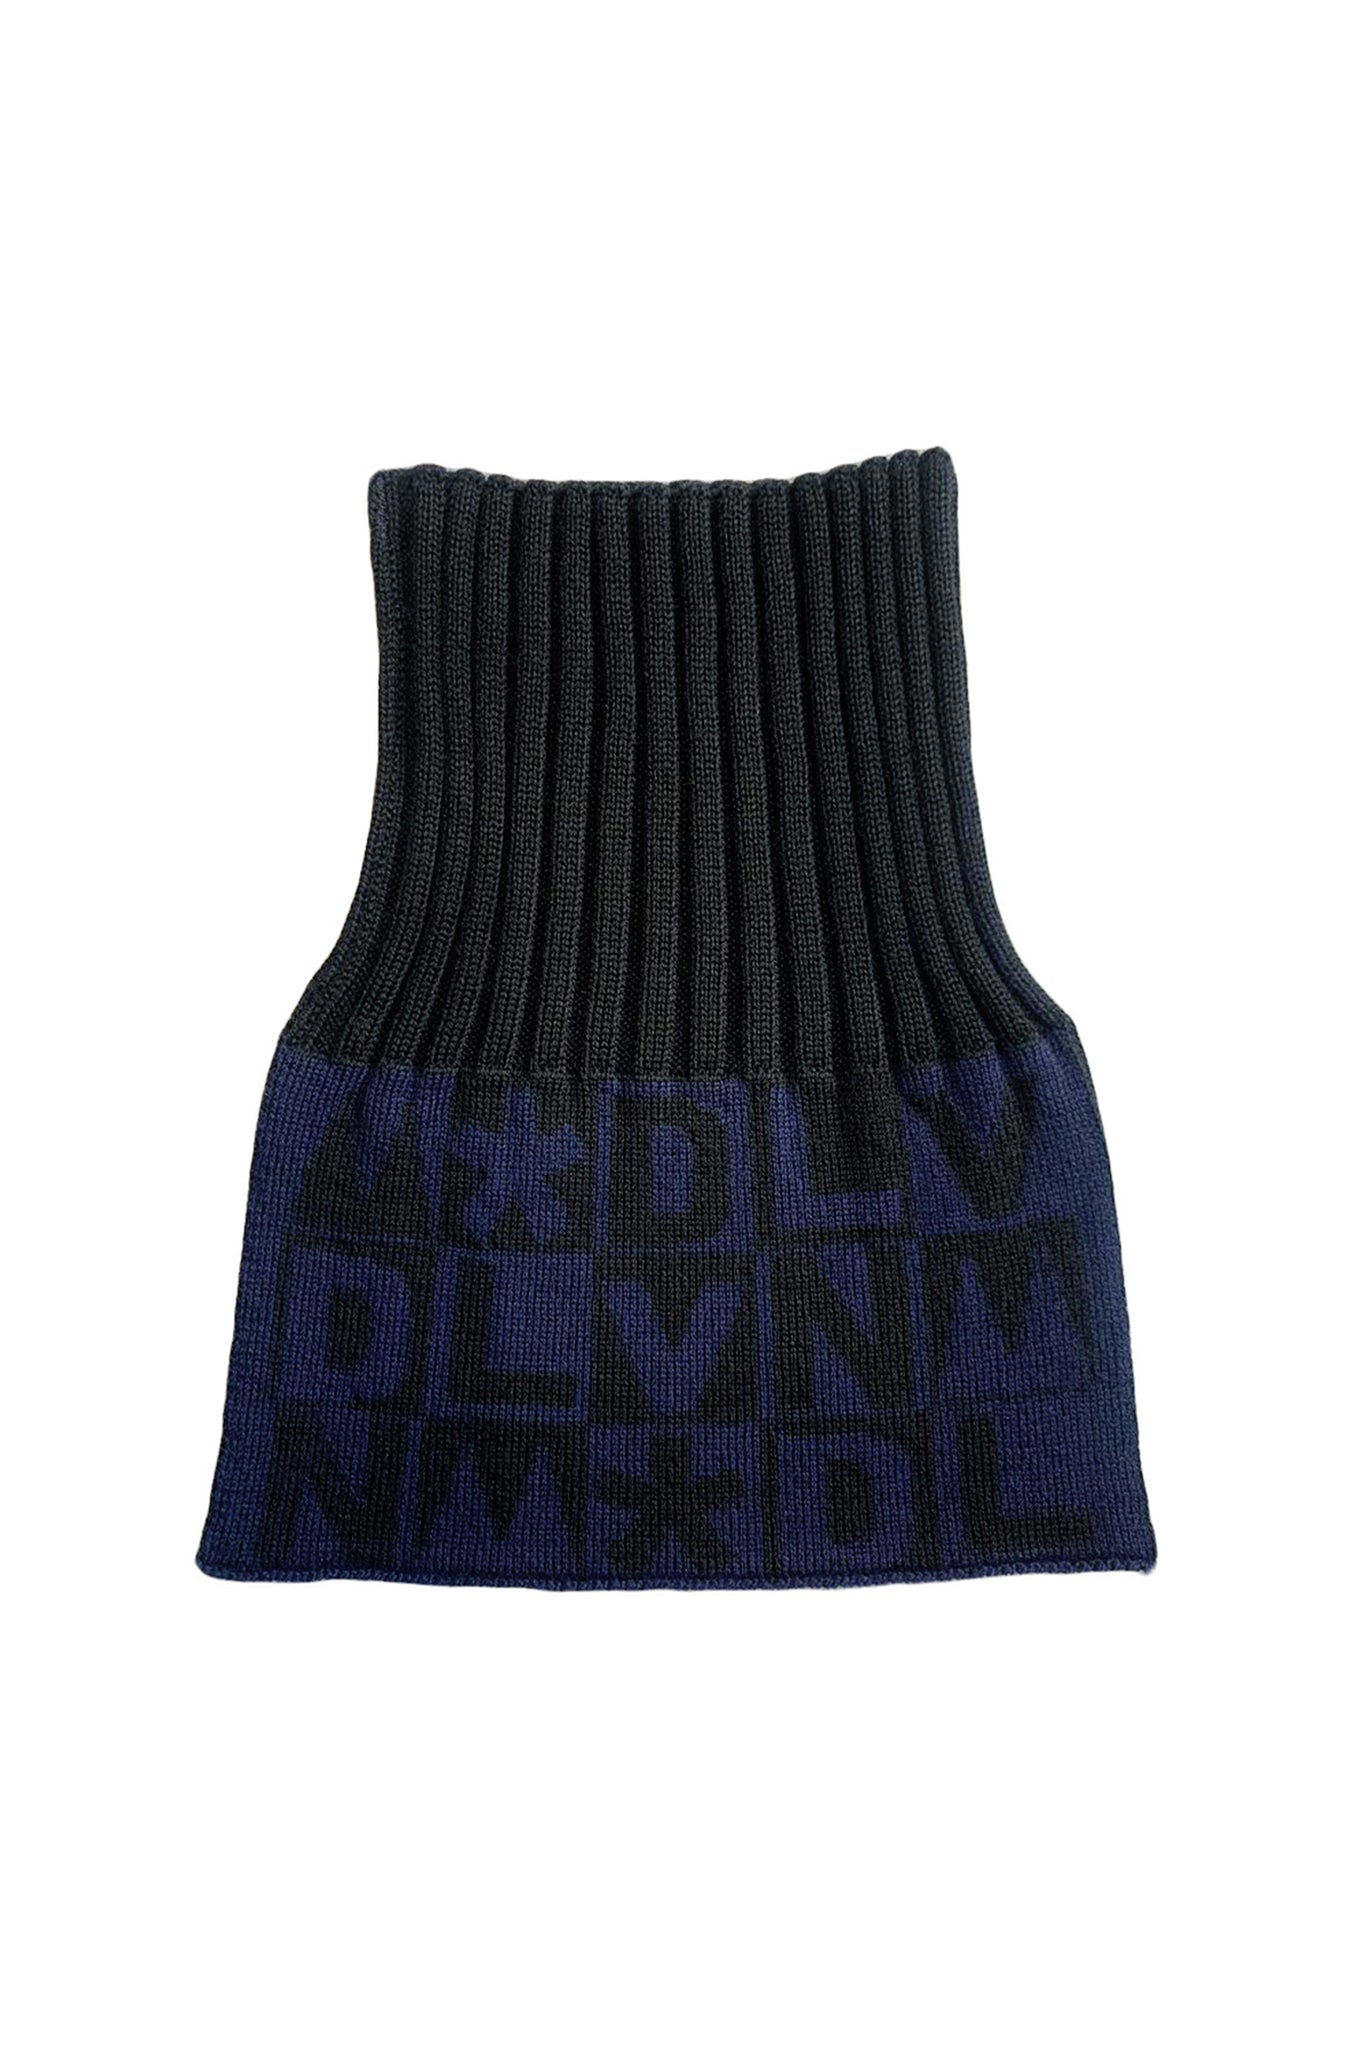 Monogram Polo Collar | Merino Wool | Black/Navy